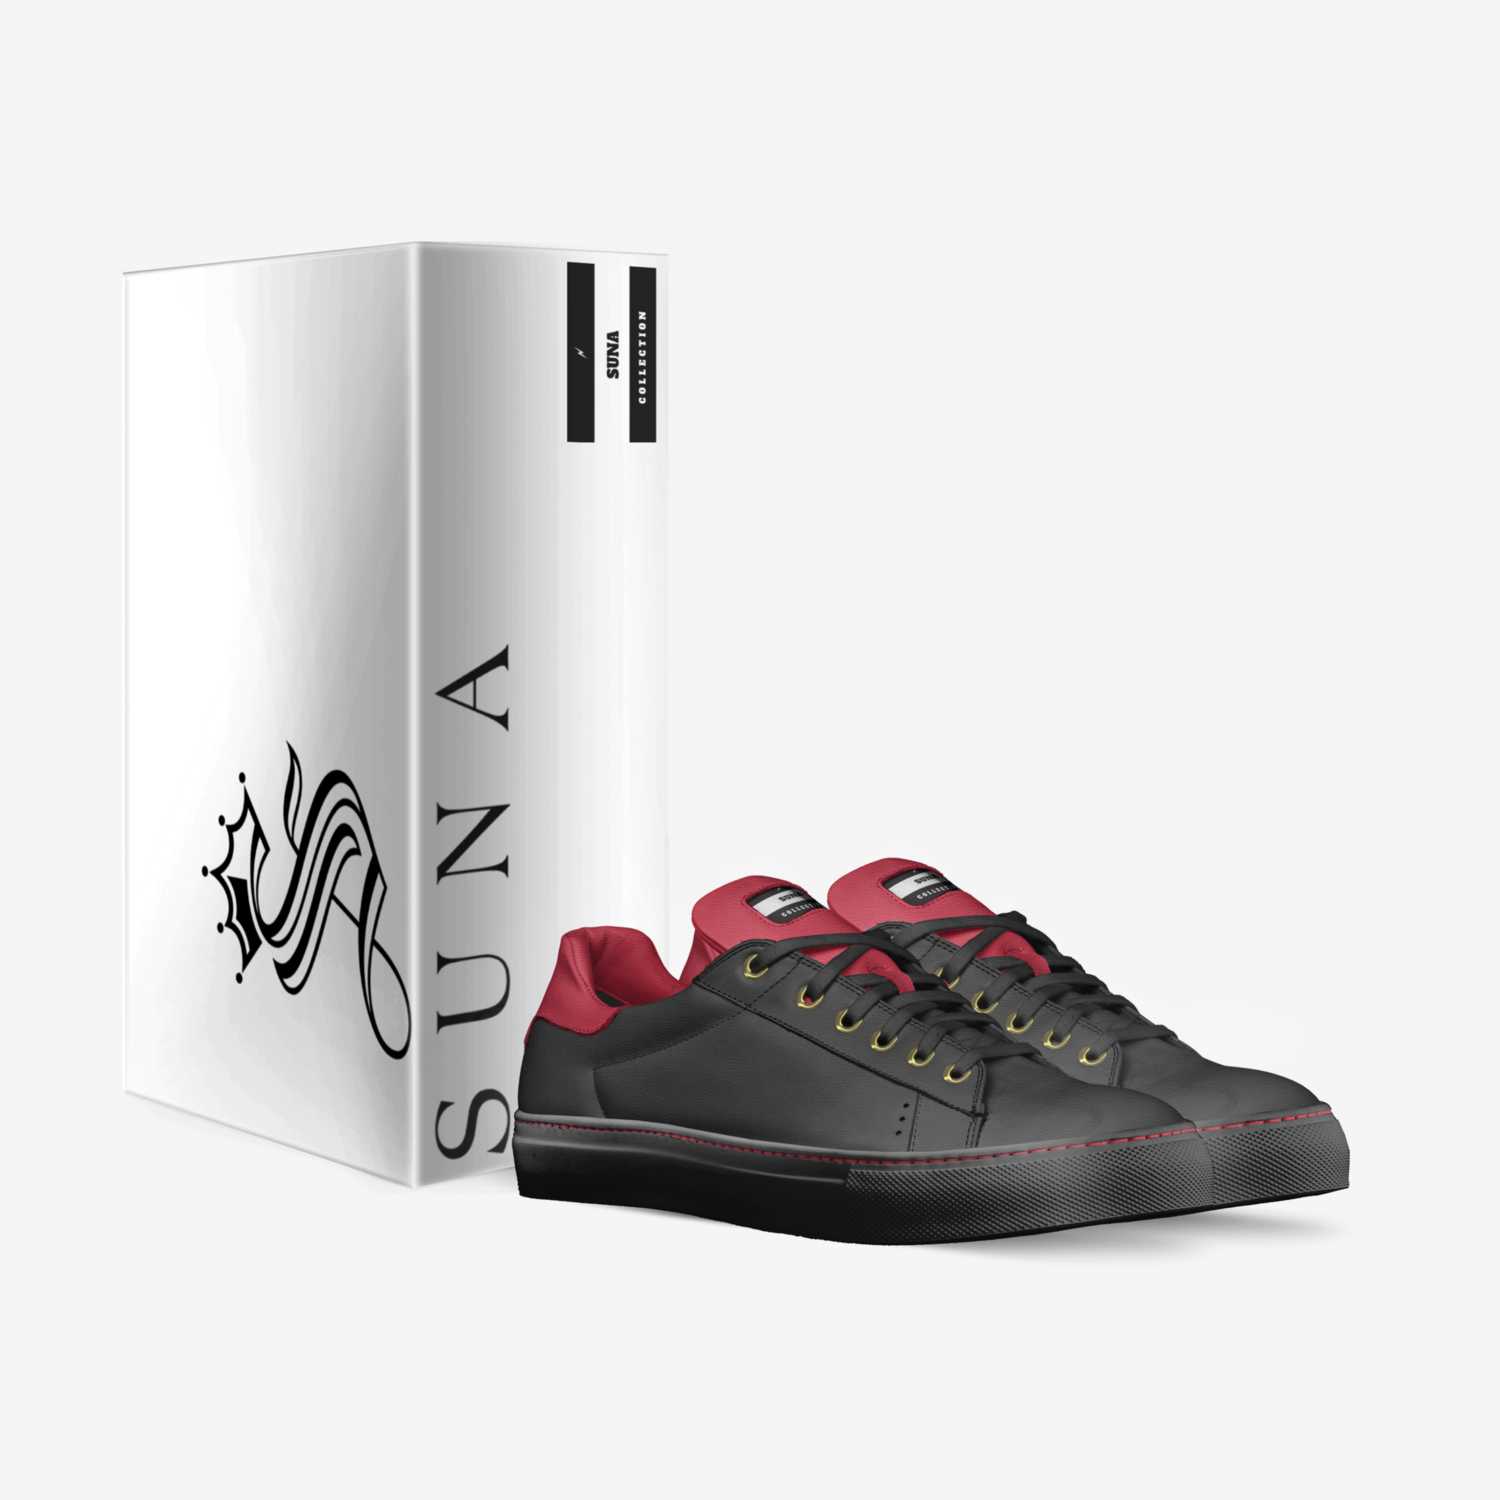 SUNA custom made in Italy shoes by Bob Hendricks | Box view